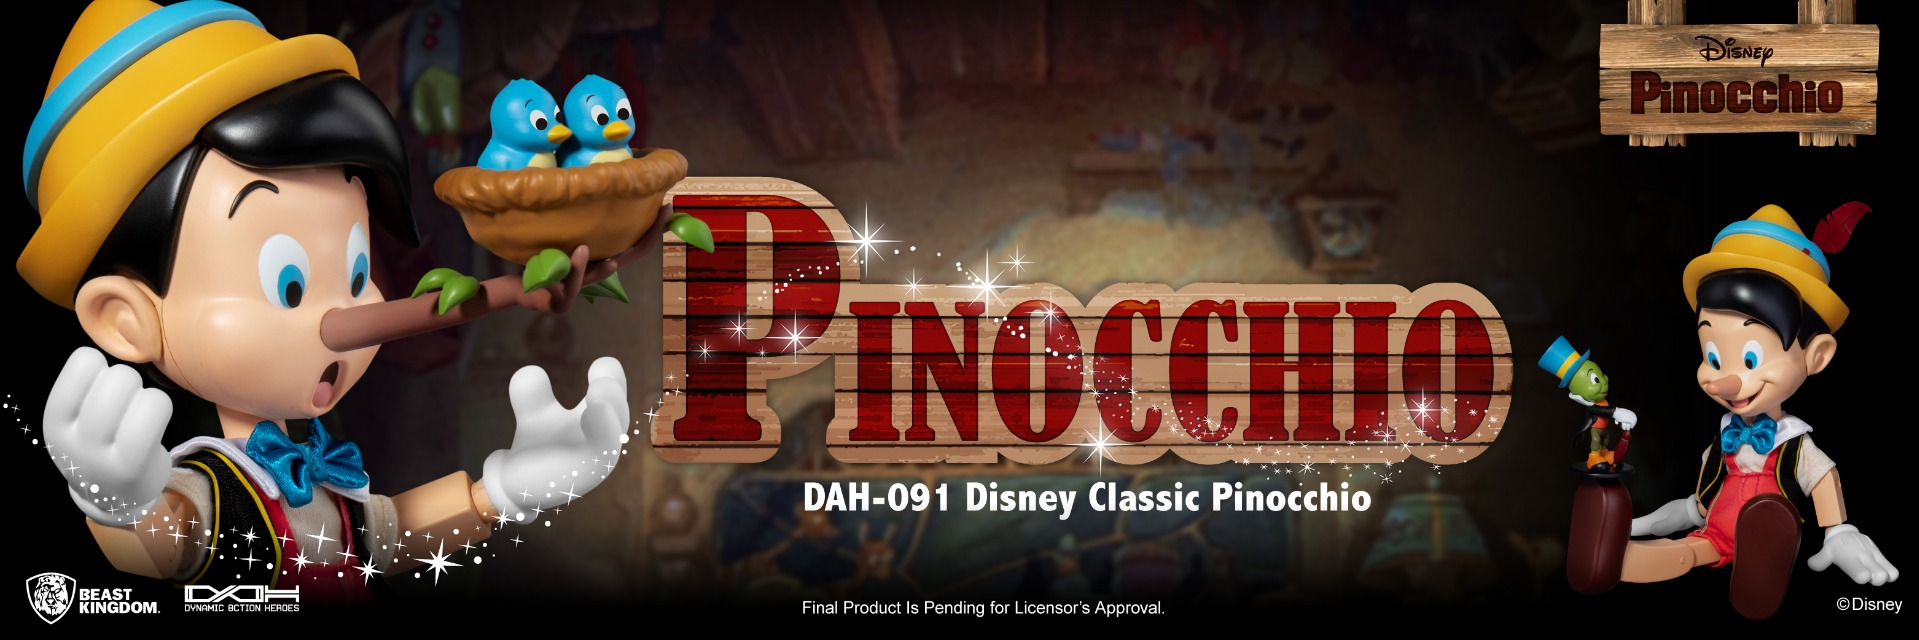 DAH-091 Pinocchio